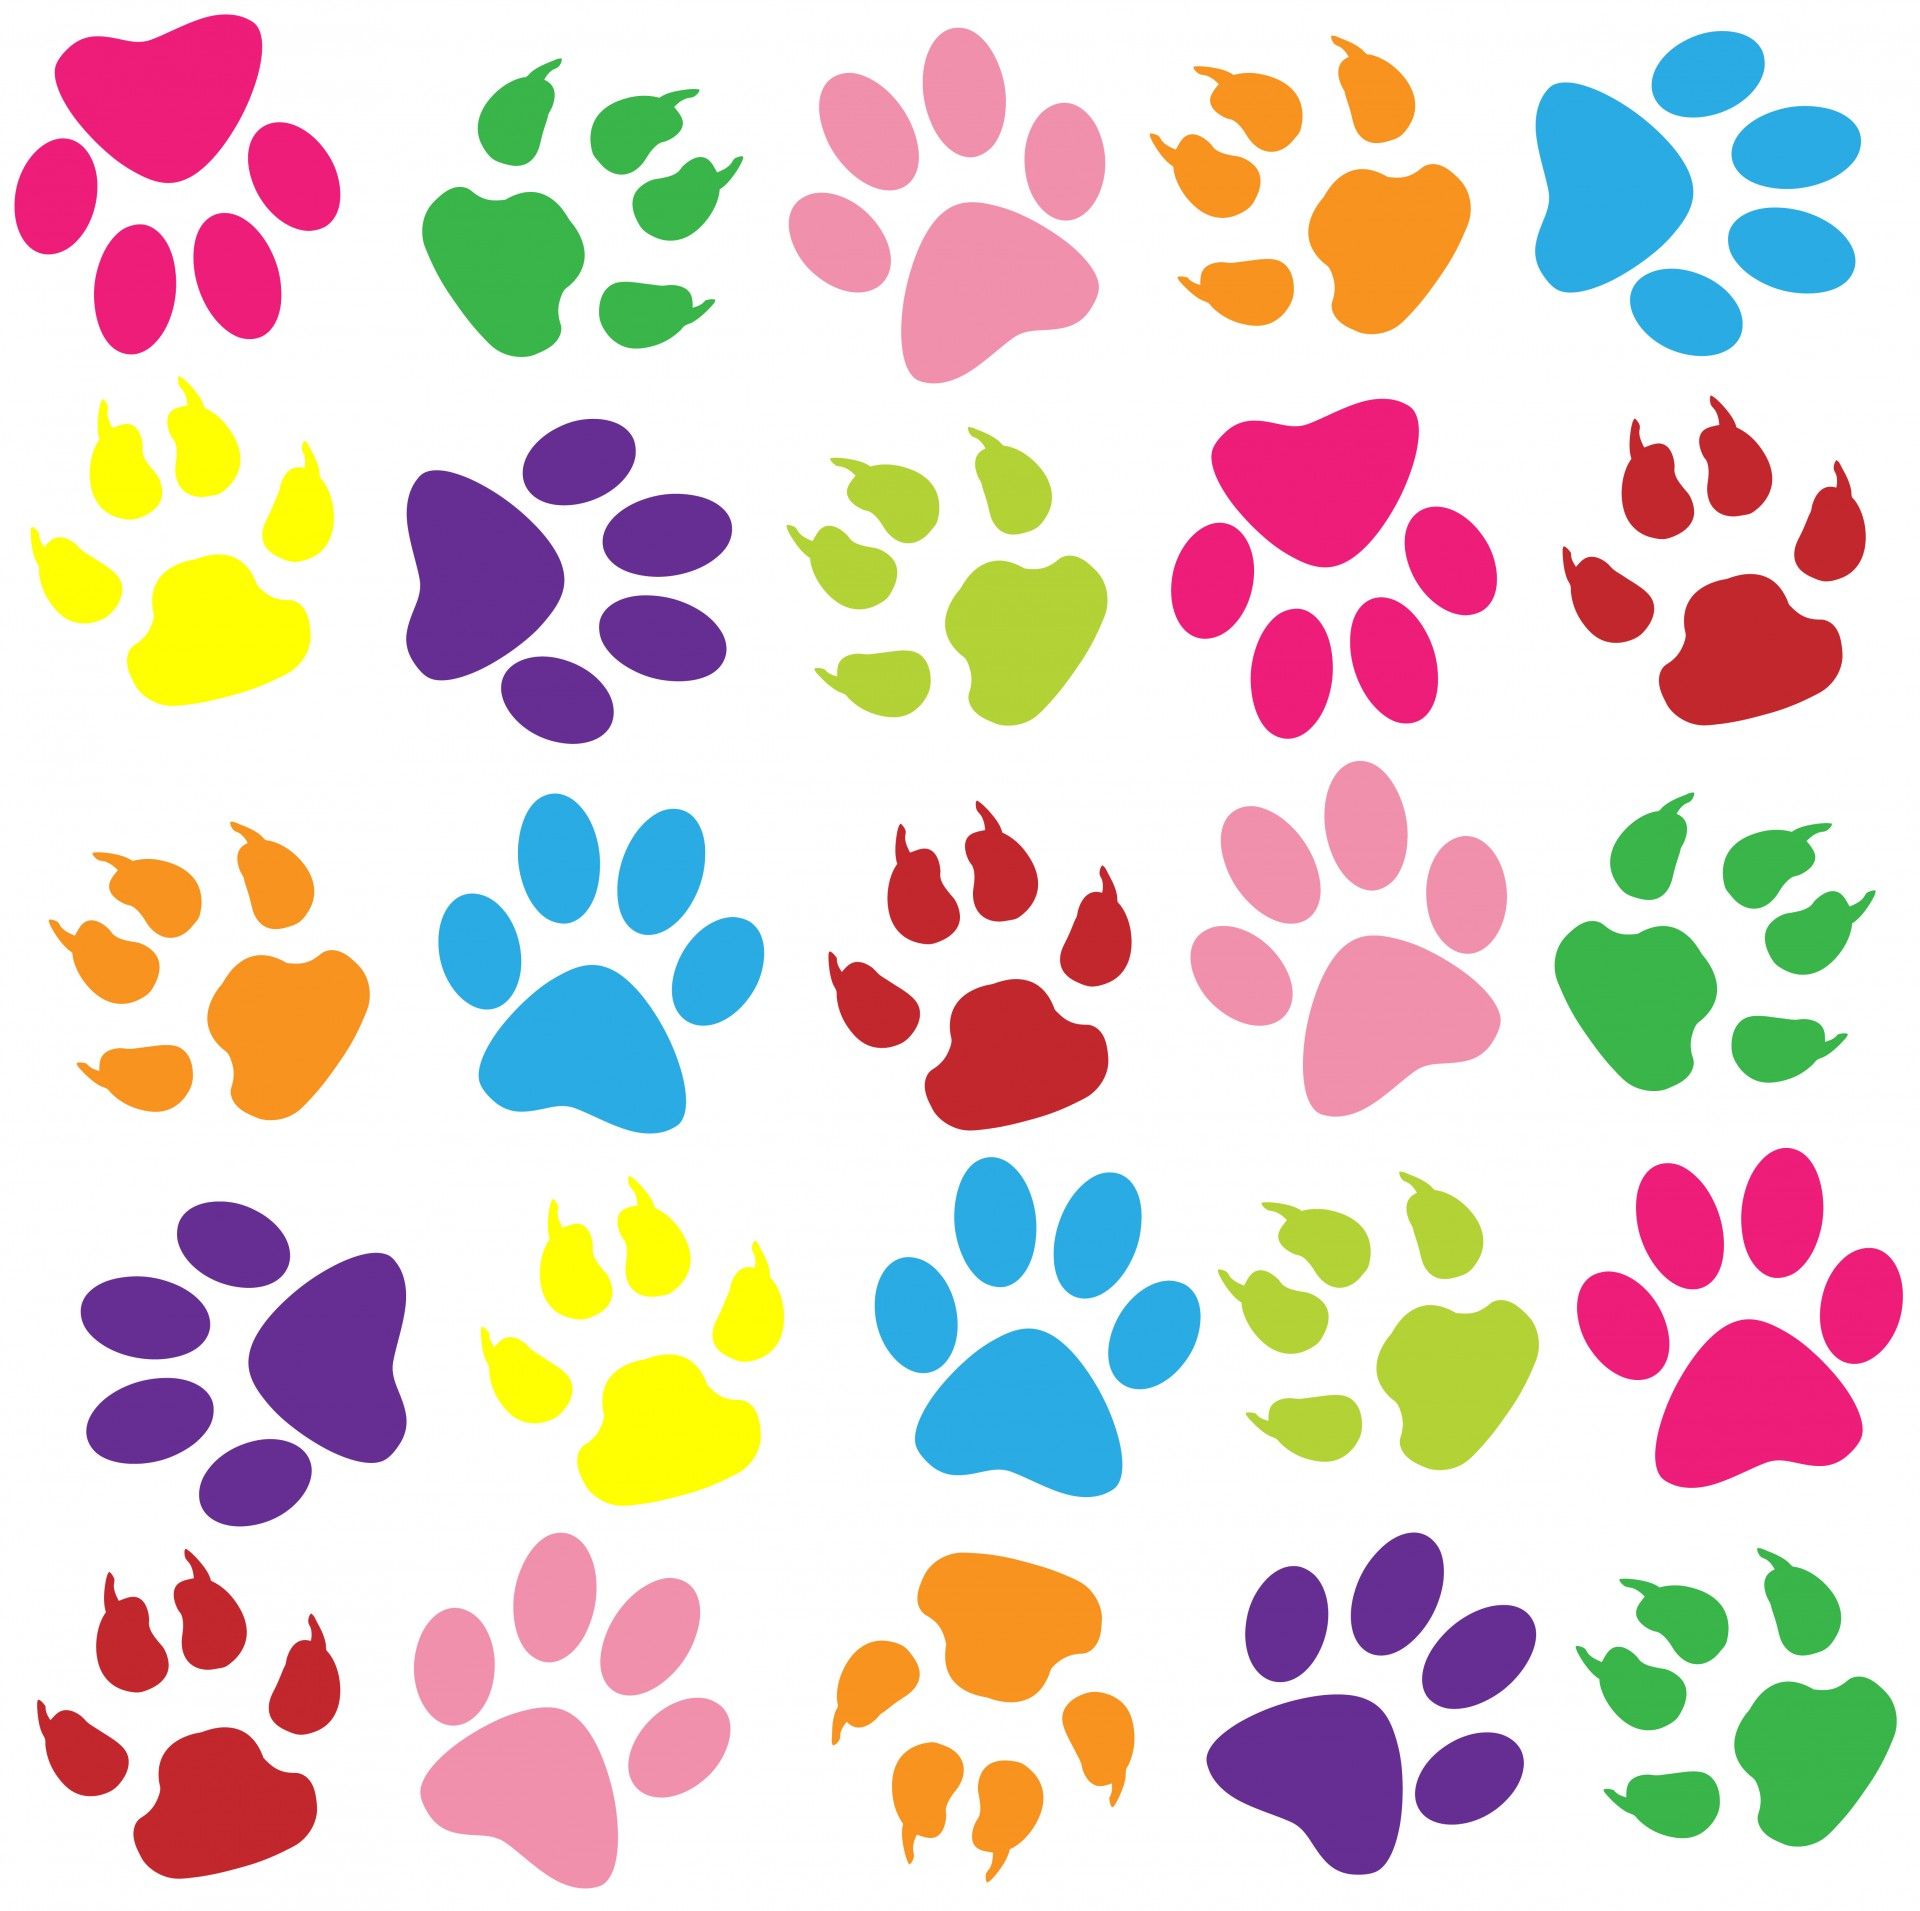 Paw Prints Colorful Background Free. Pet paw print